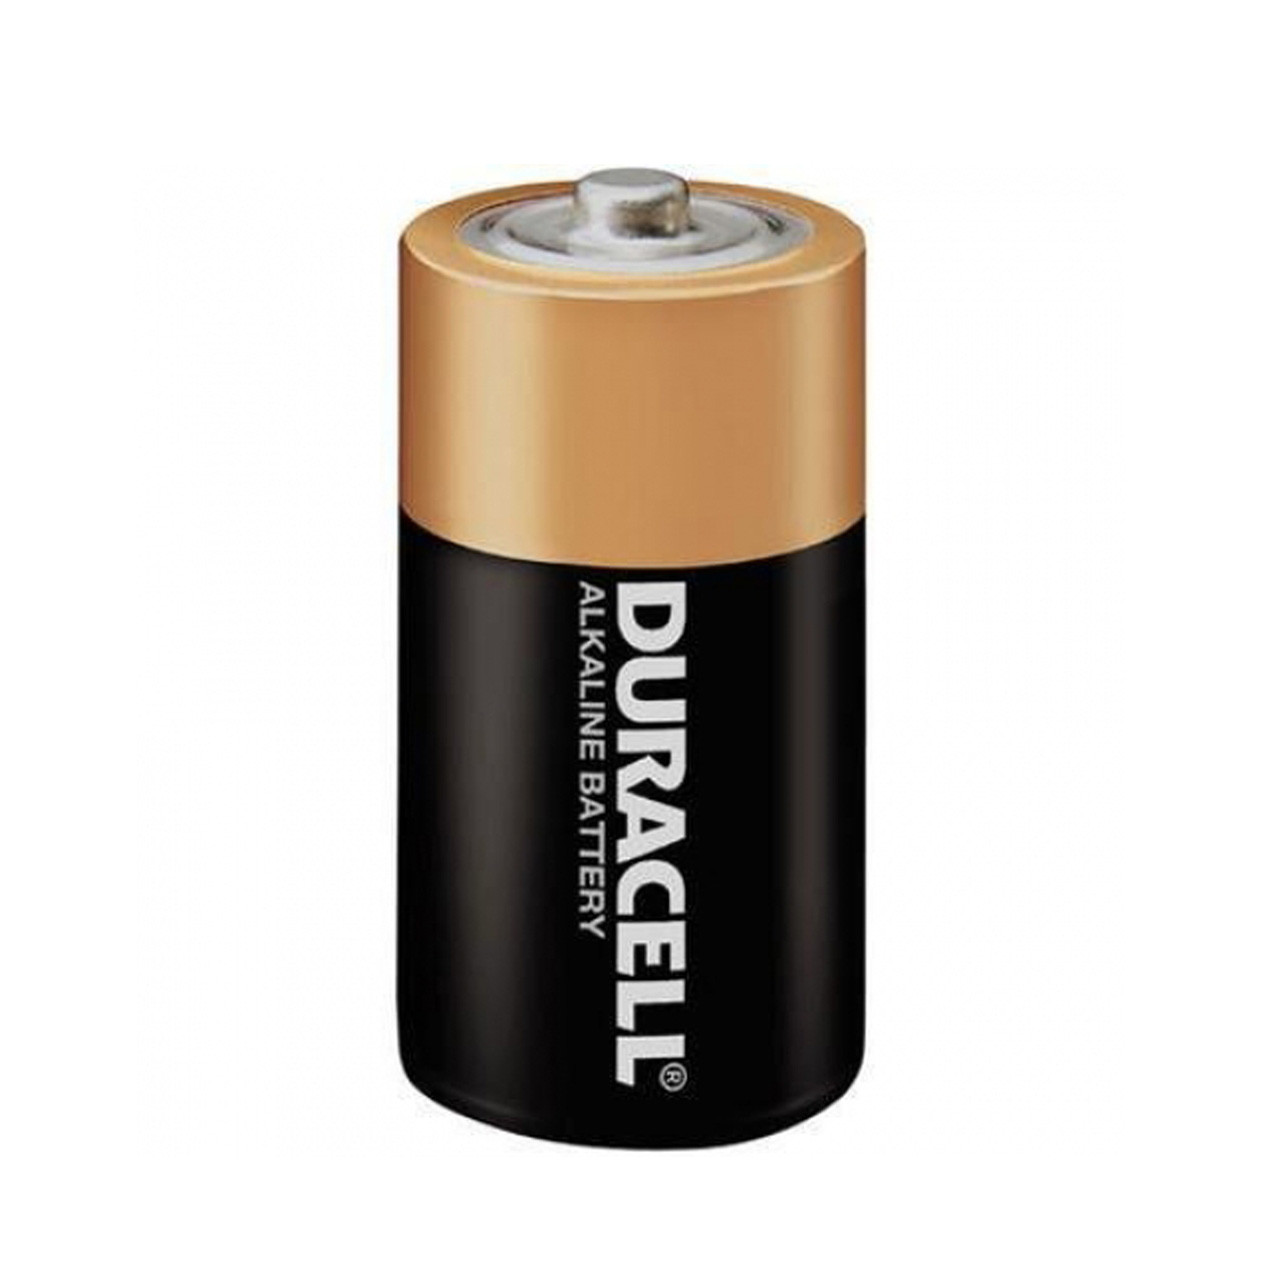 motor vals Doe mee Duracell C Battery - 10 Year Shelf Life - EmergencyKits.com